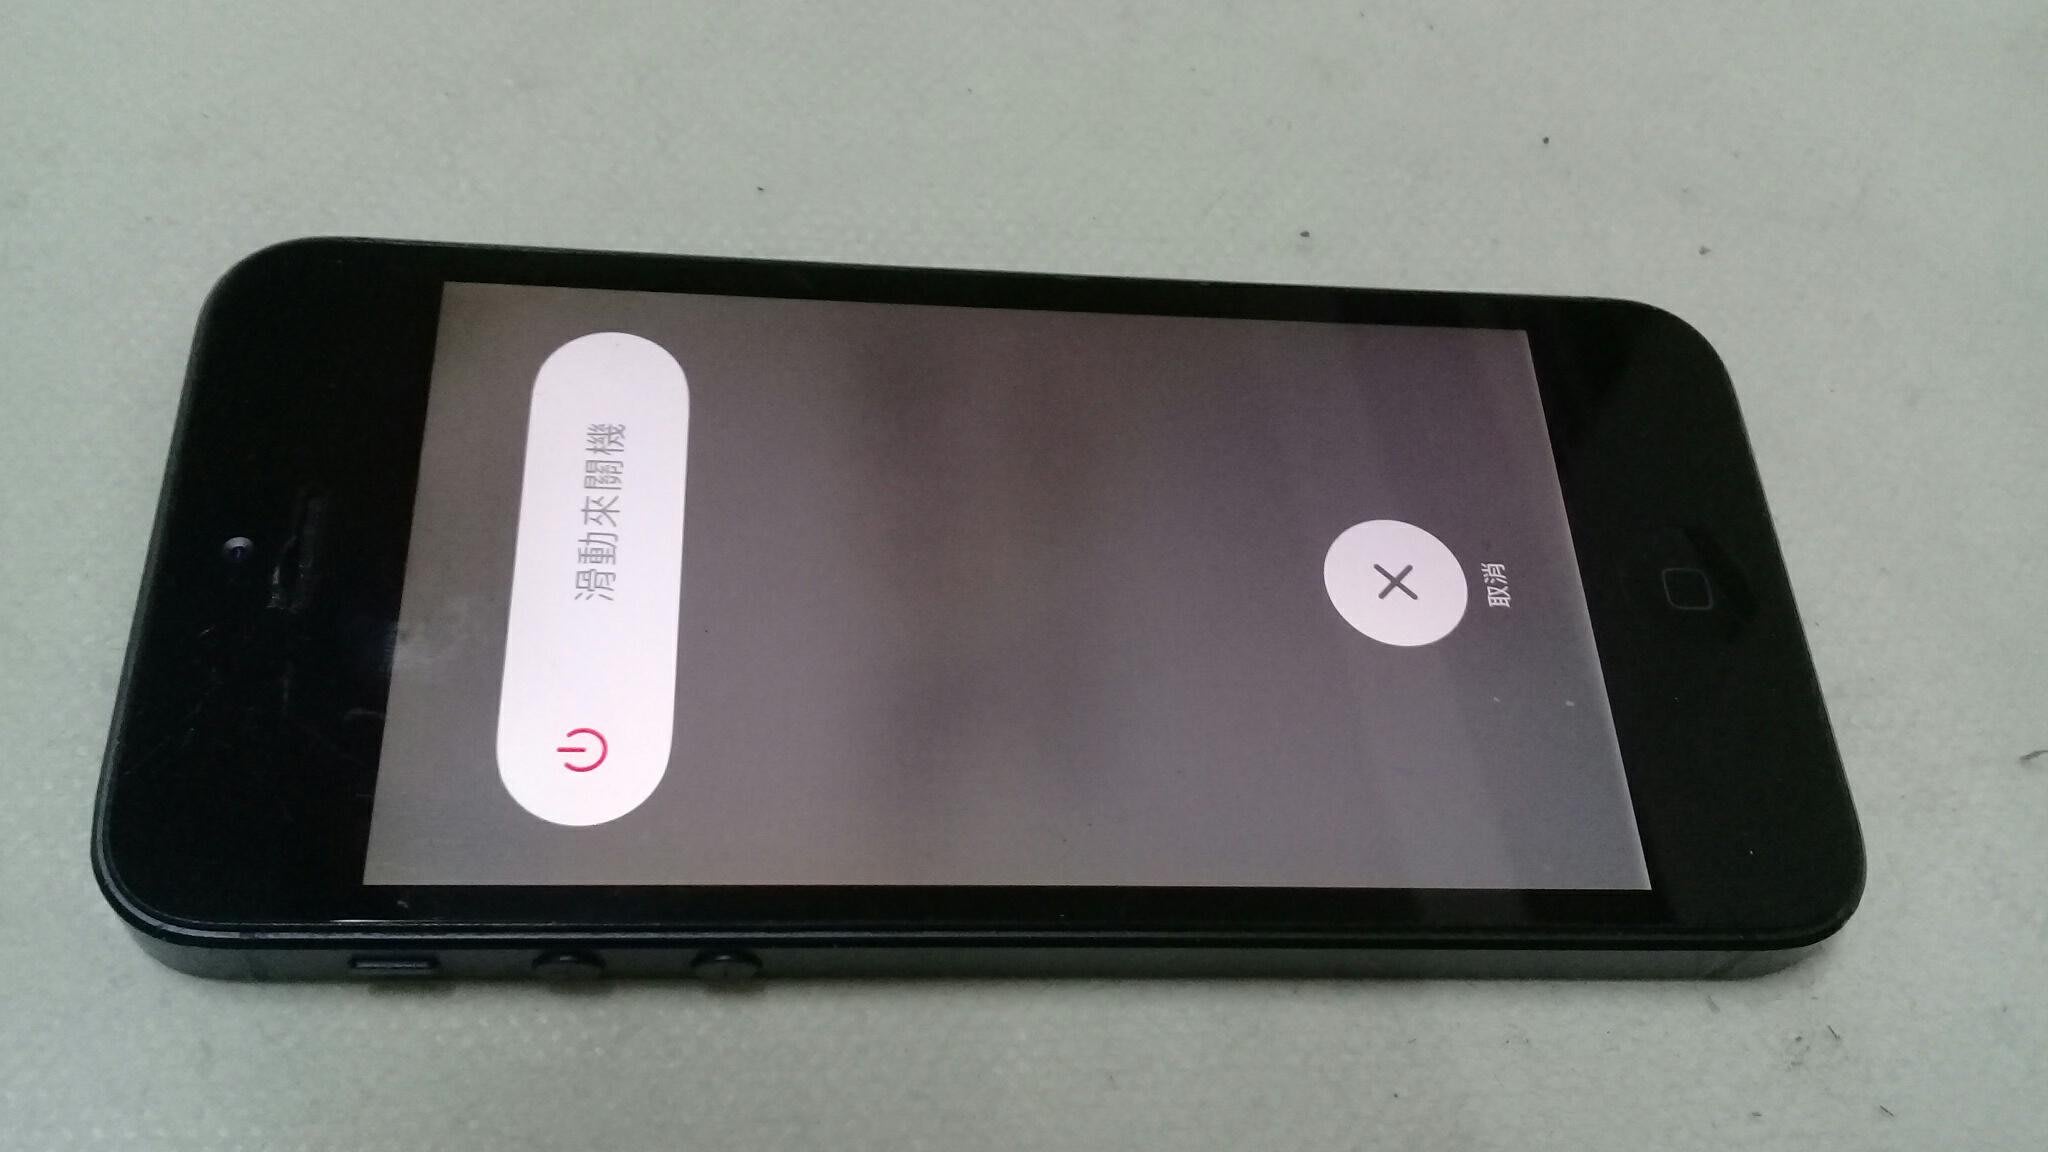 Iphon5s Iphone 二手手機 中古手機 手機空機 Iphone5s 有盒子 可正常開機與充電 有時會顯示4g字樣 有密碼鎖 當零件機販售 Yahoo奇摩拍賣